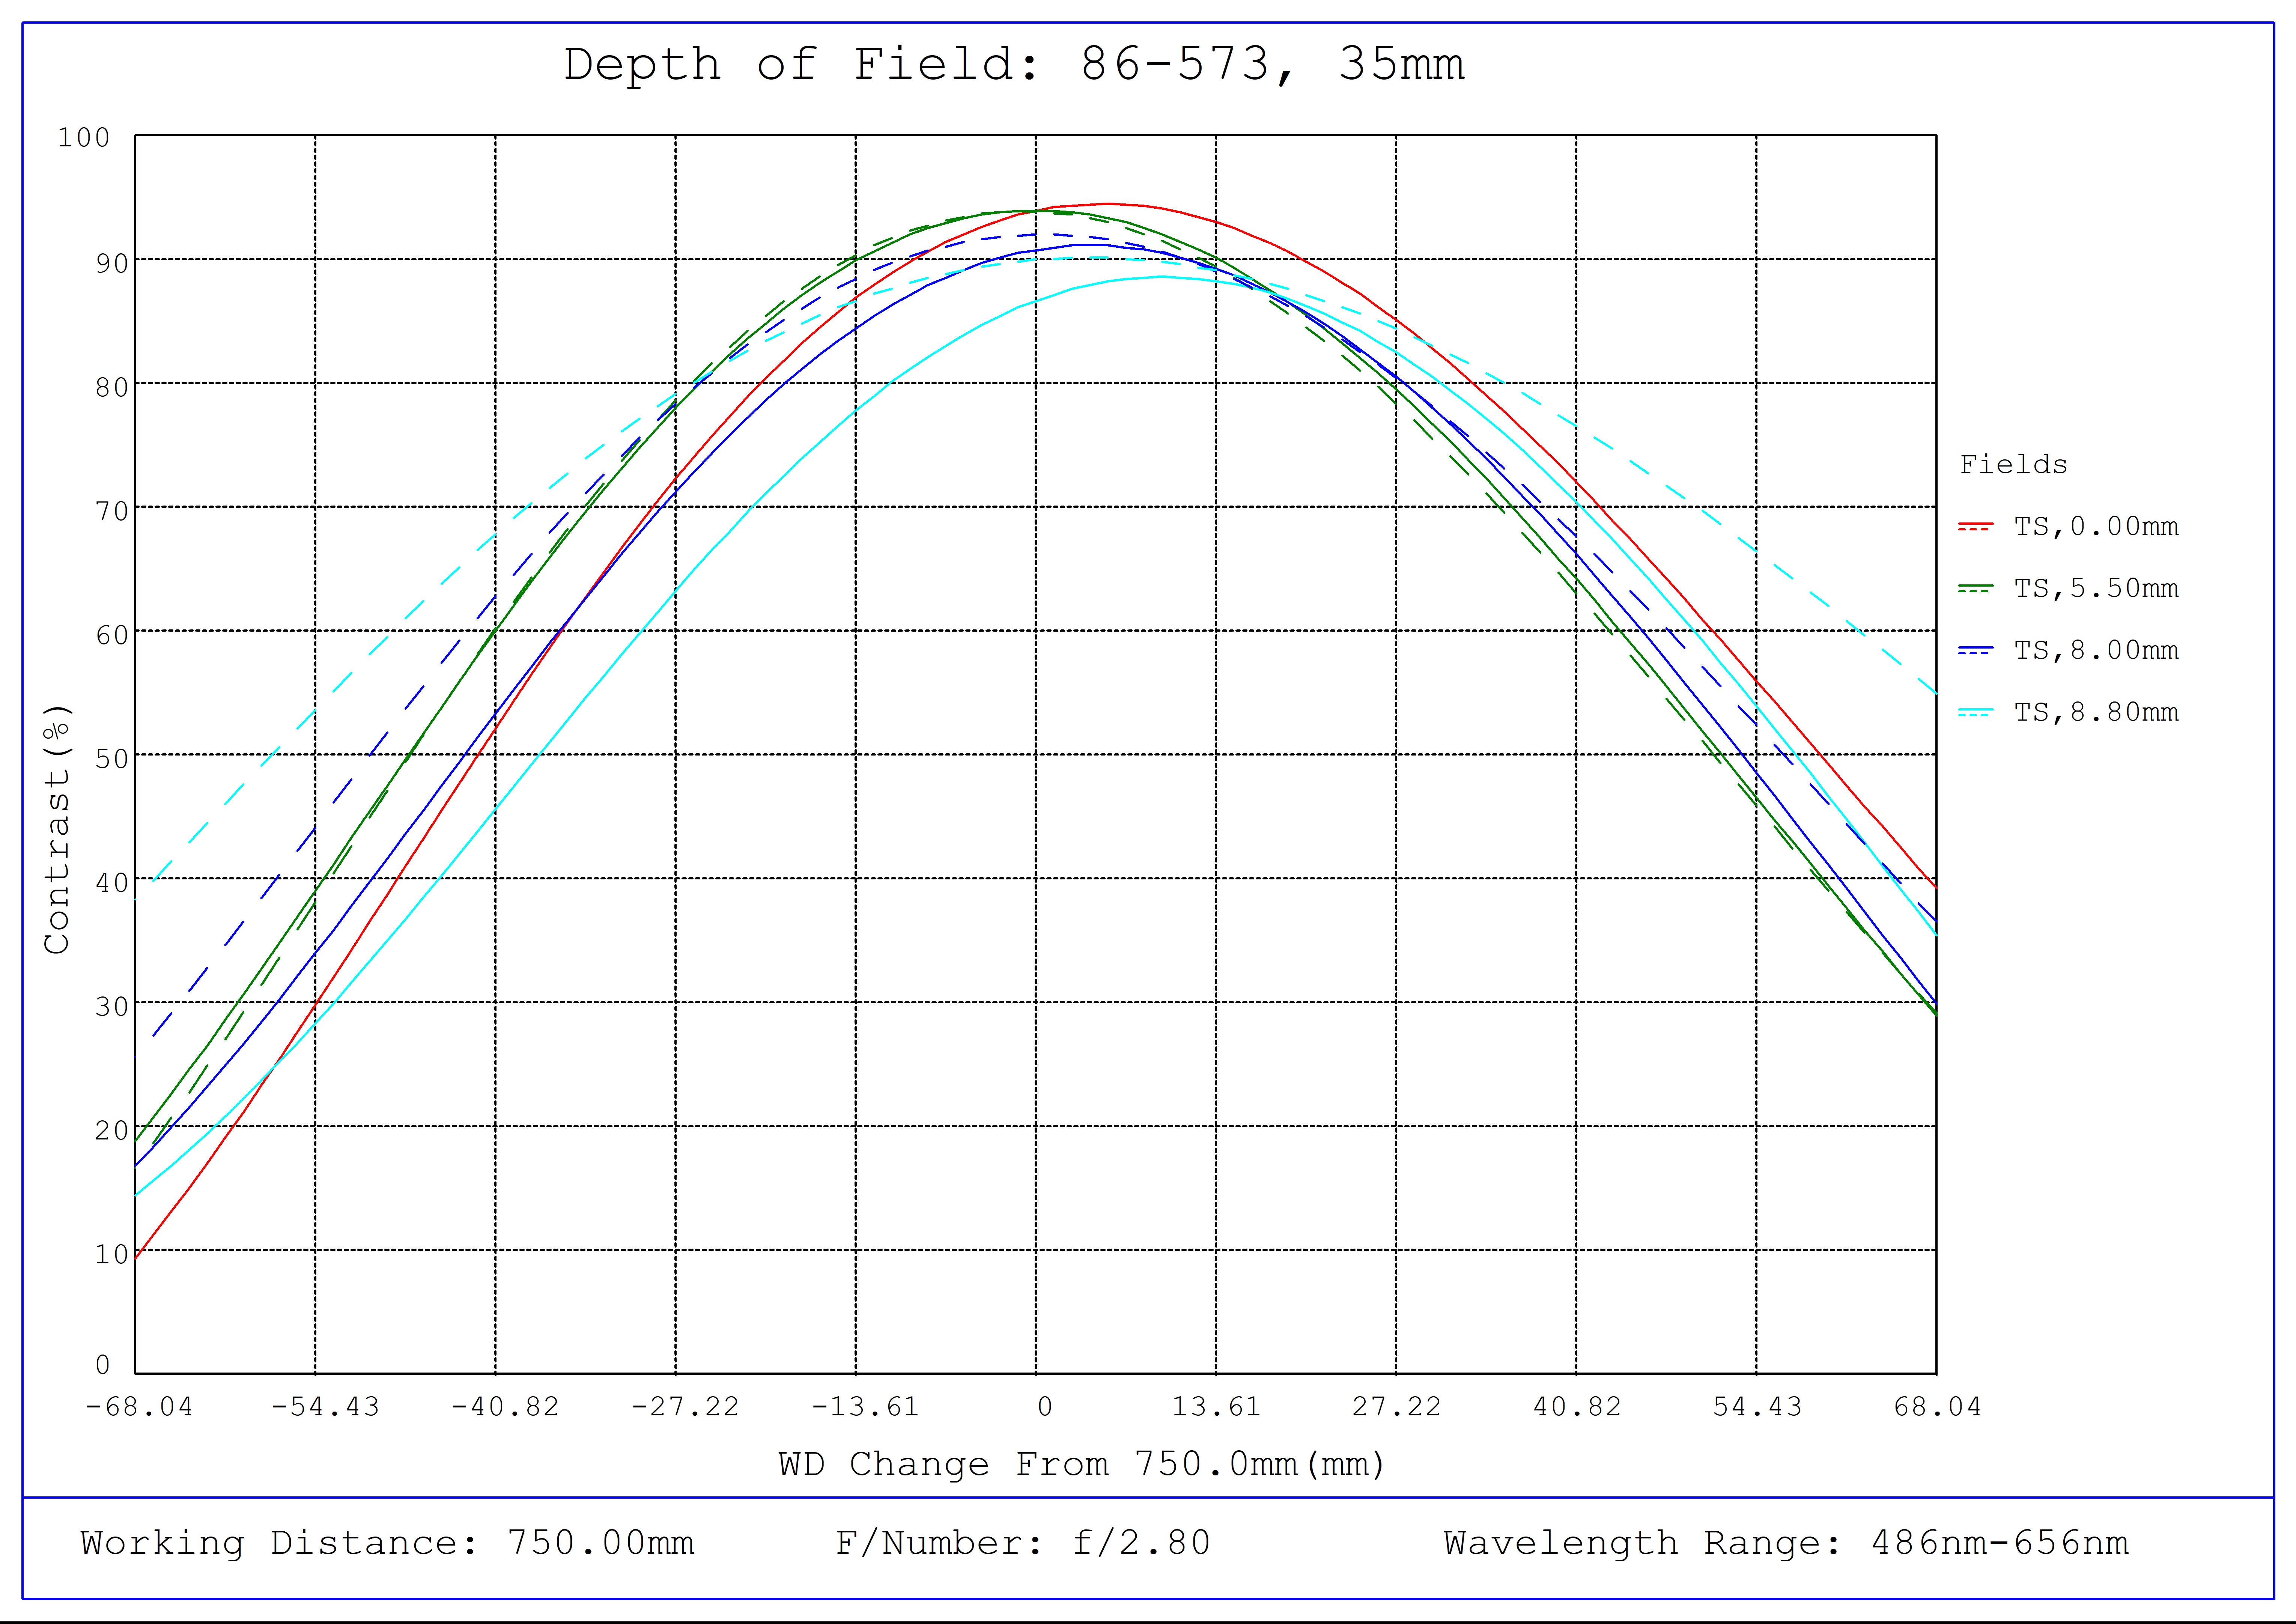 #86-573, 35mm Focal Length, HP Series Fixed Focal Length Lens, Depth of Field Plot, 750mm Working Distance, f2.8